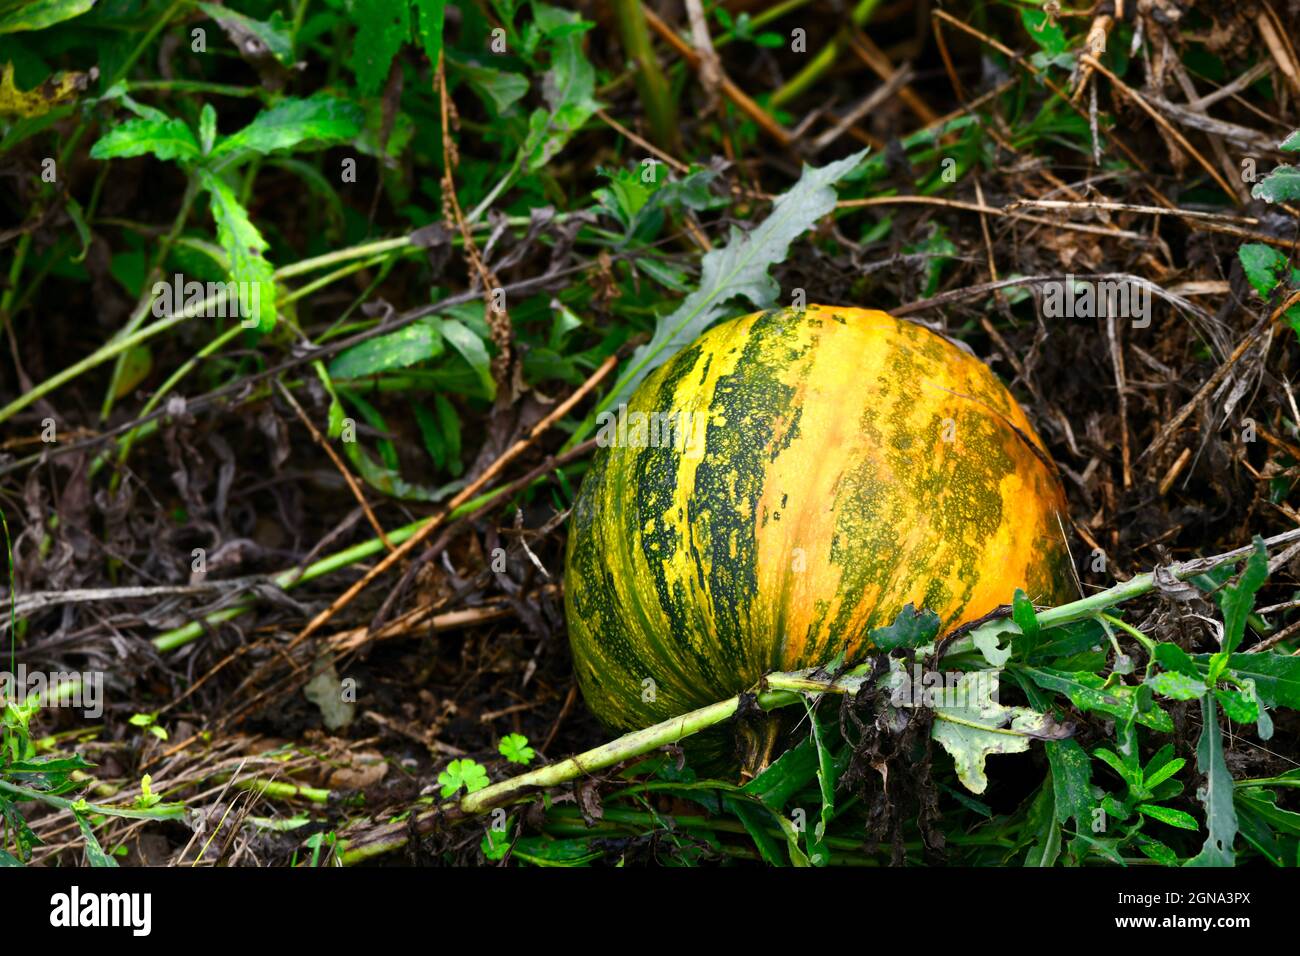 Grosser, gelb-grüner, im Feld liegender Speisekürbis - Muskatkürbis - cucurbita - pumpkin Stock Photo